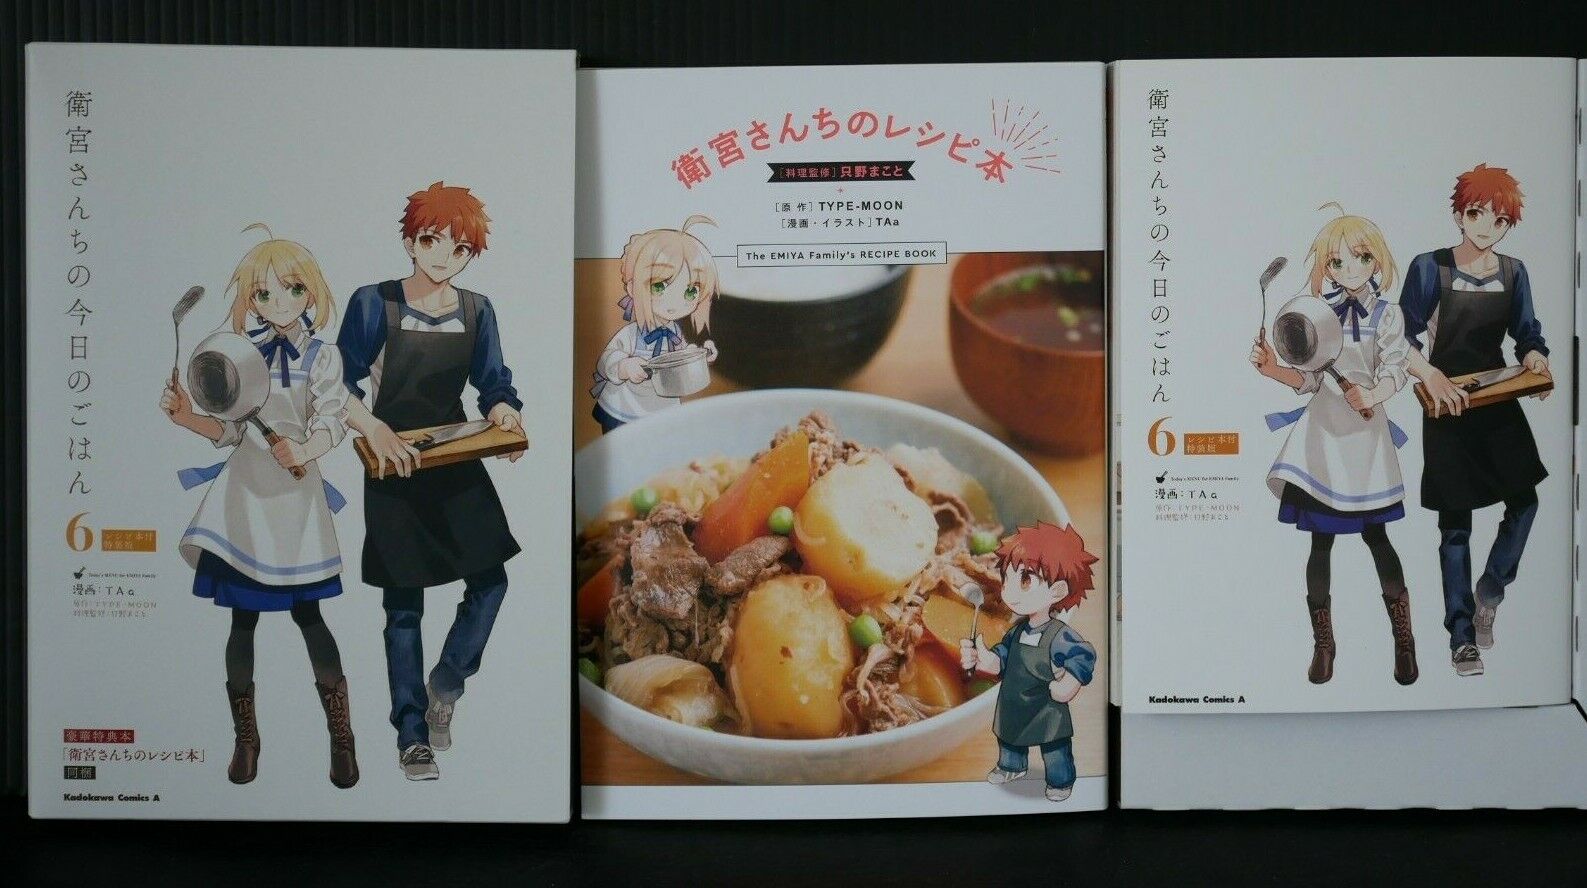 SHOHAN: Today's Menu for the Emiya Family Vol.6: Limited Edition Manga by TAa